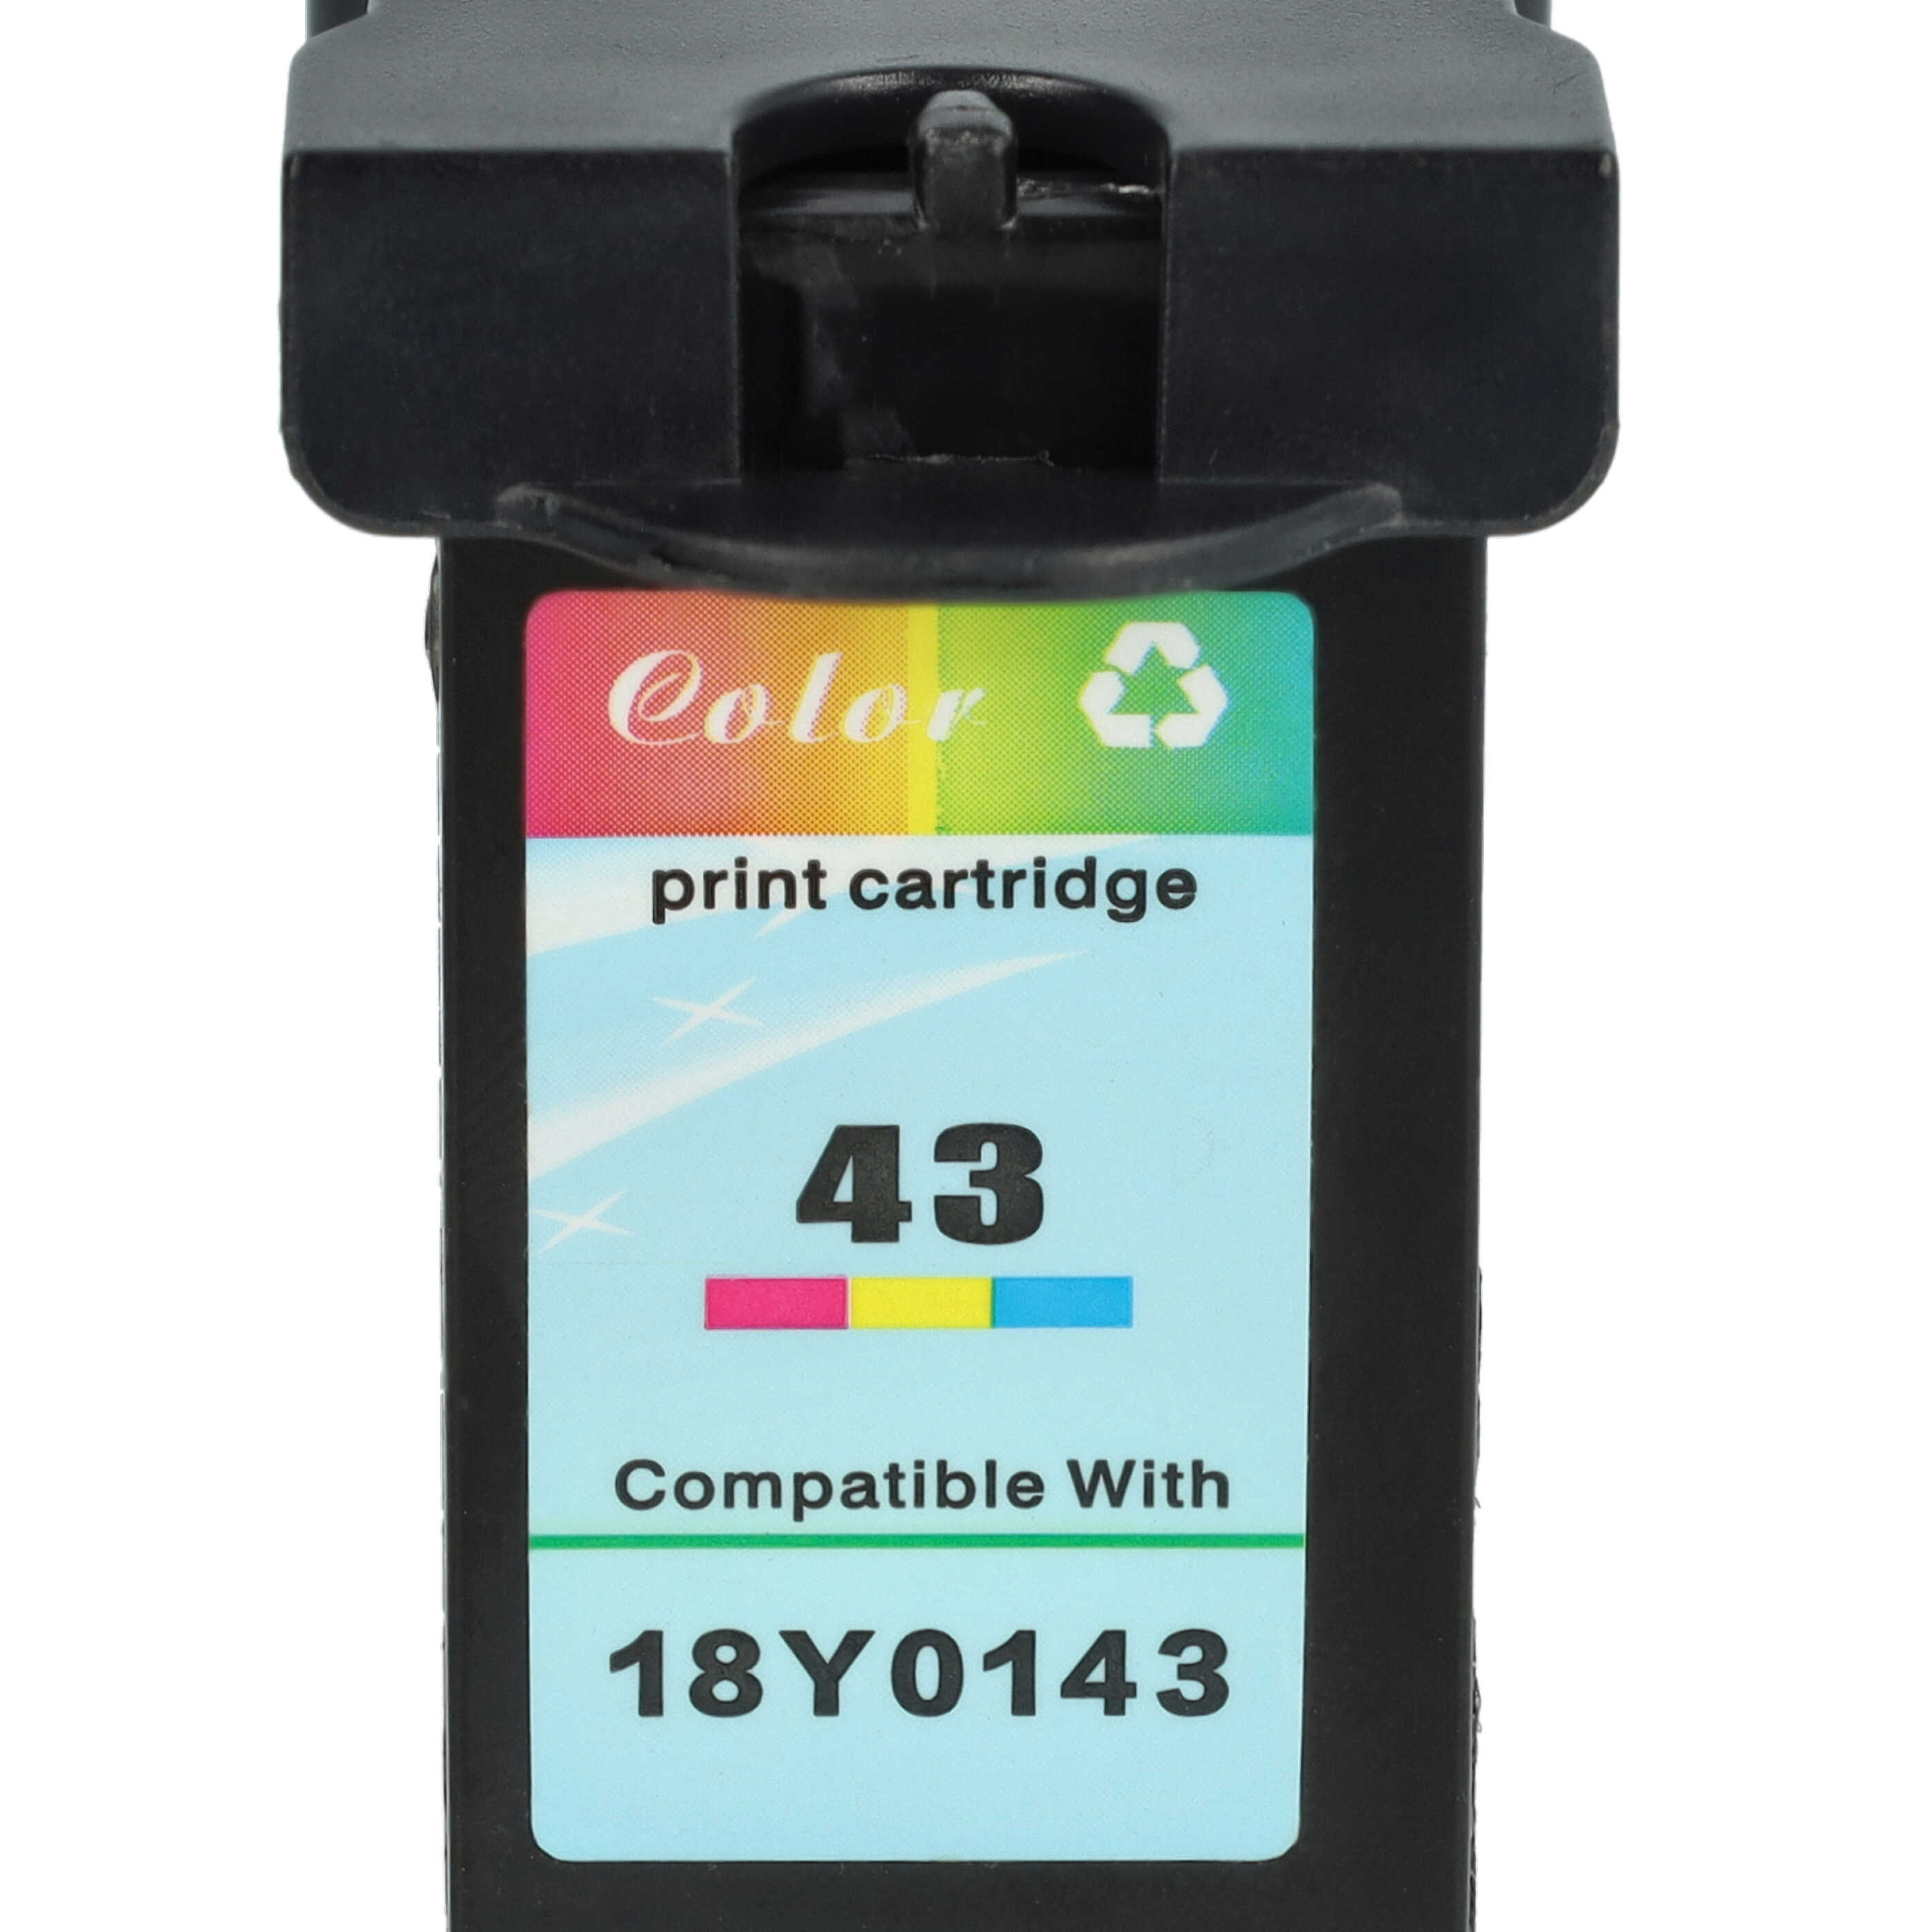 2x Ink Cartridges replaces Lexmark 18Y0341E, 18Y0141E, 18Y0143, 18Y0142E, 18Y0144 for P350 Printer - B/C/M/Y